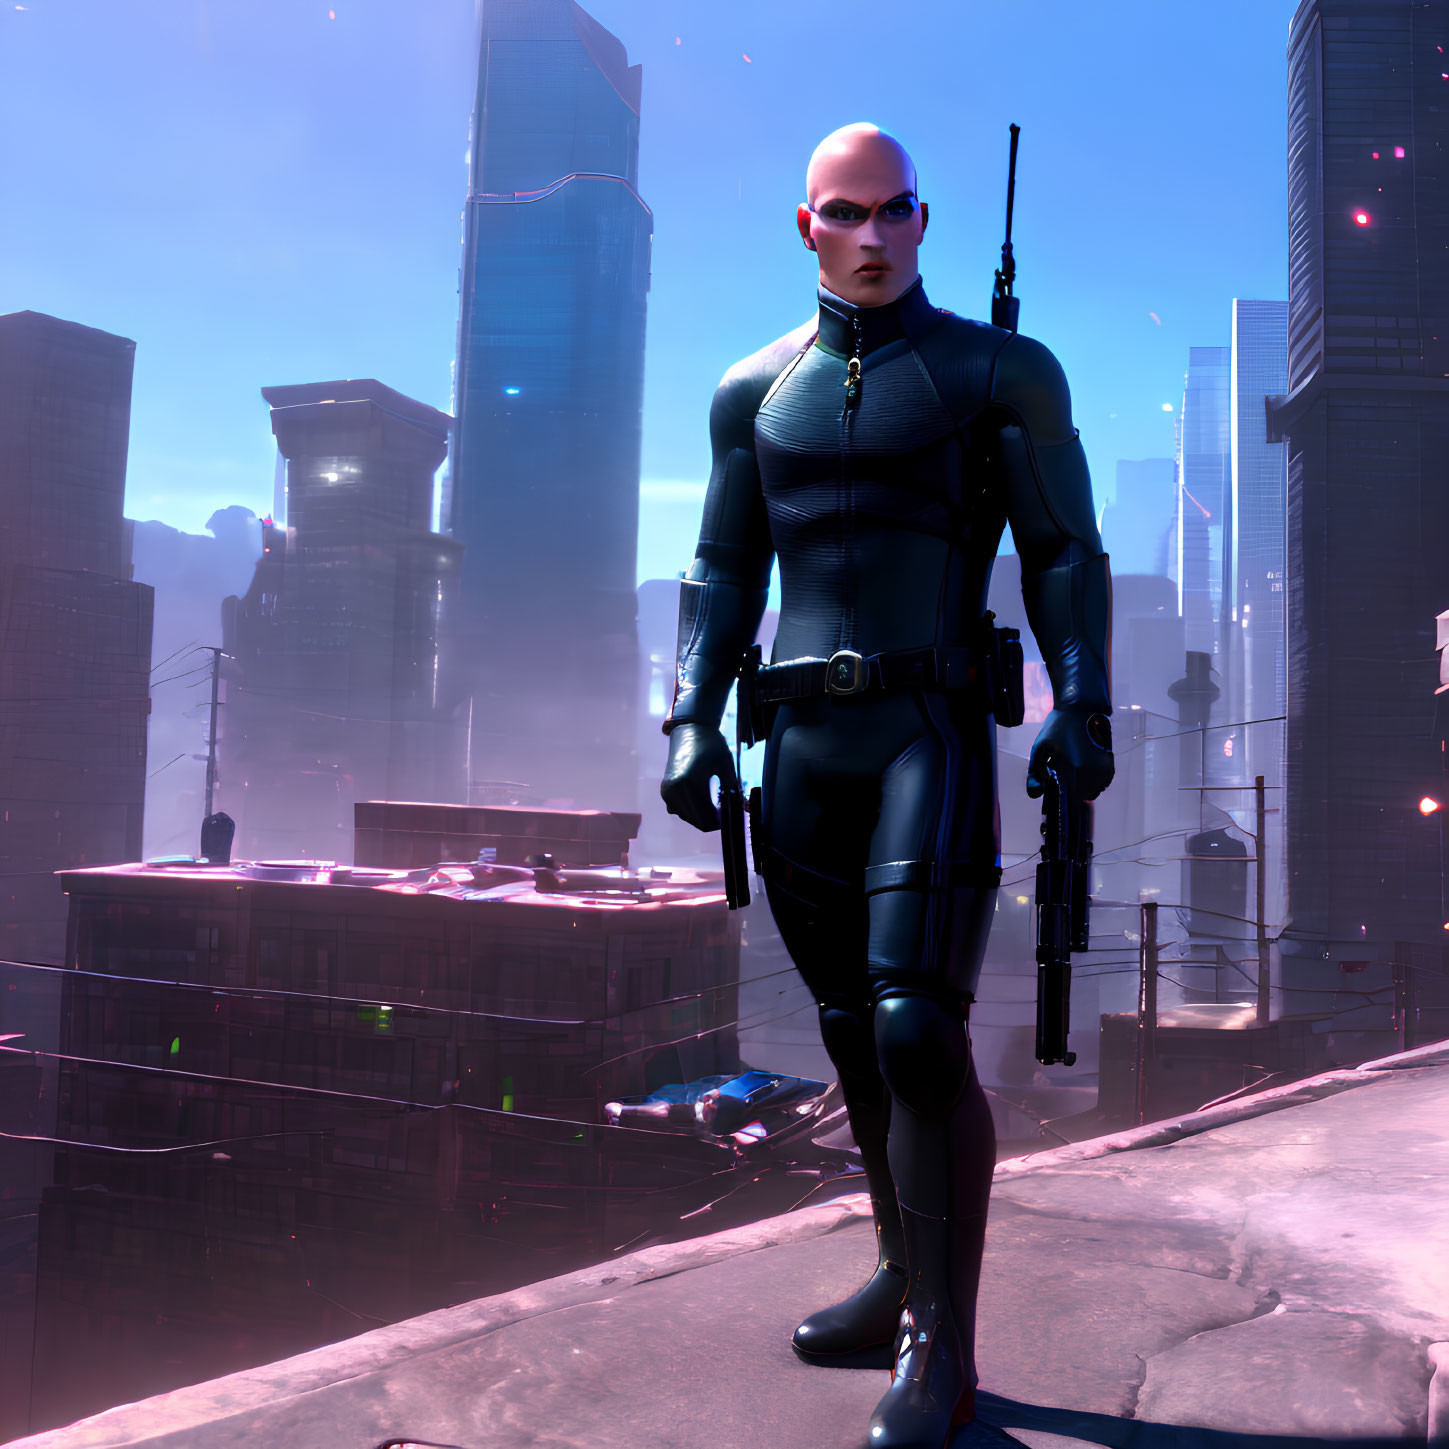 Futuristic bald character in black suit with gun & purple-hazed city skyline